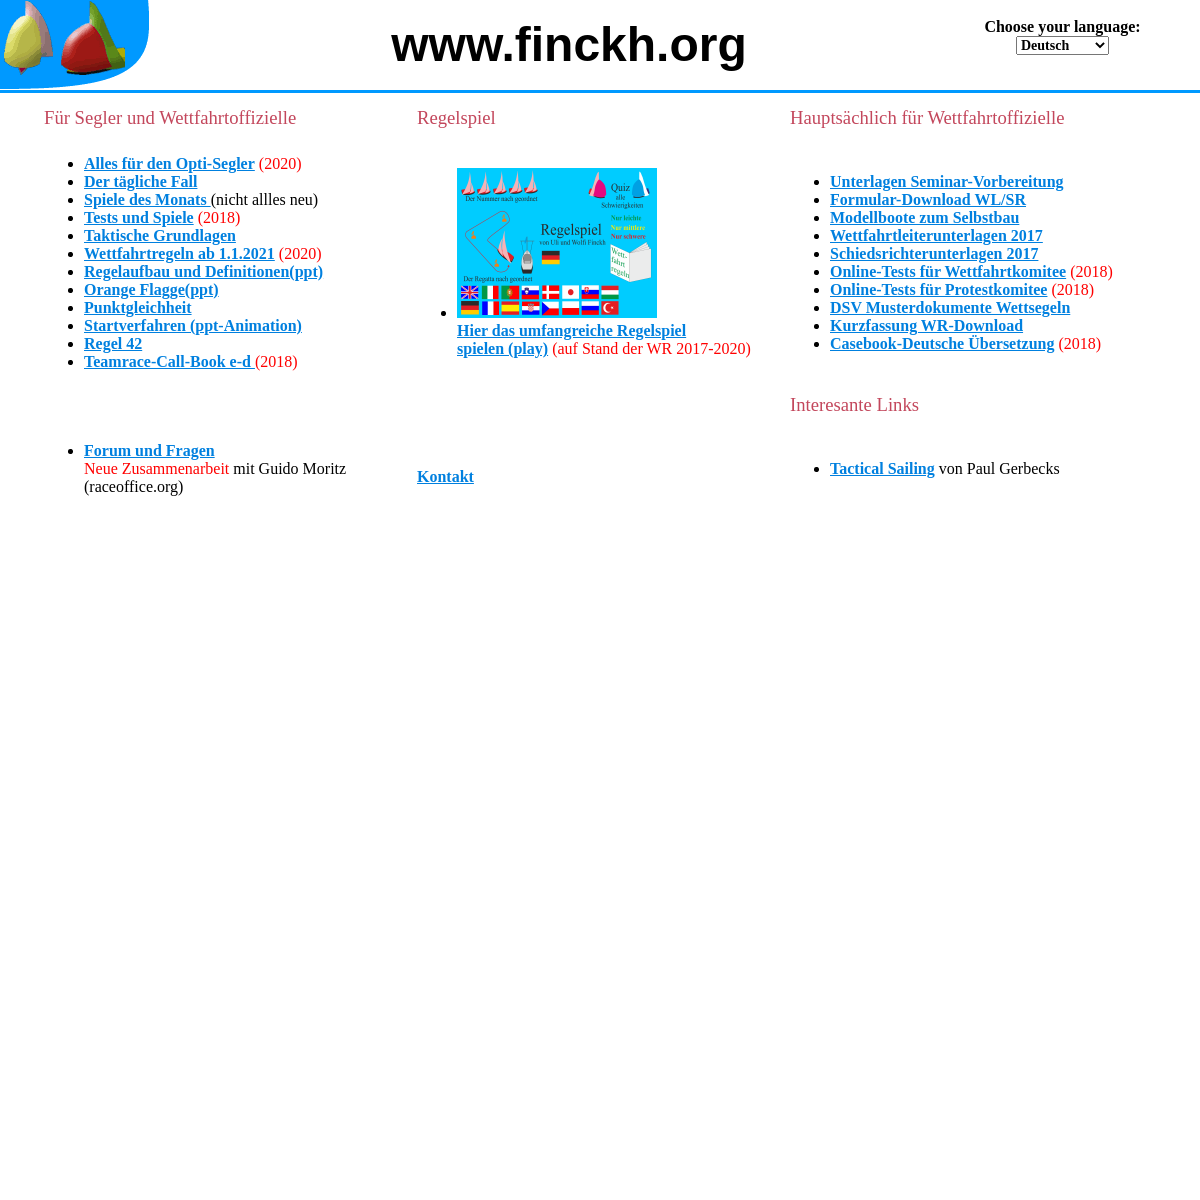 A complete backup of finckh.net